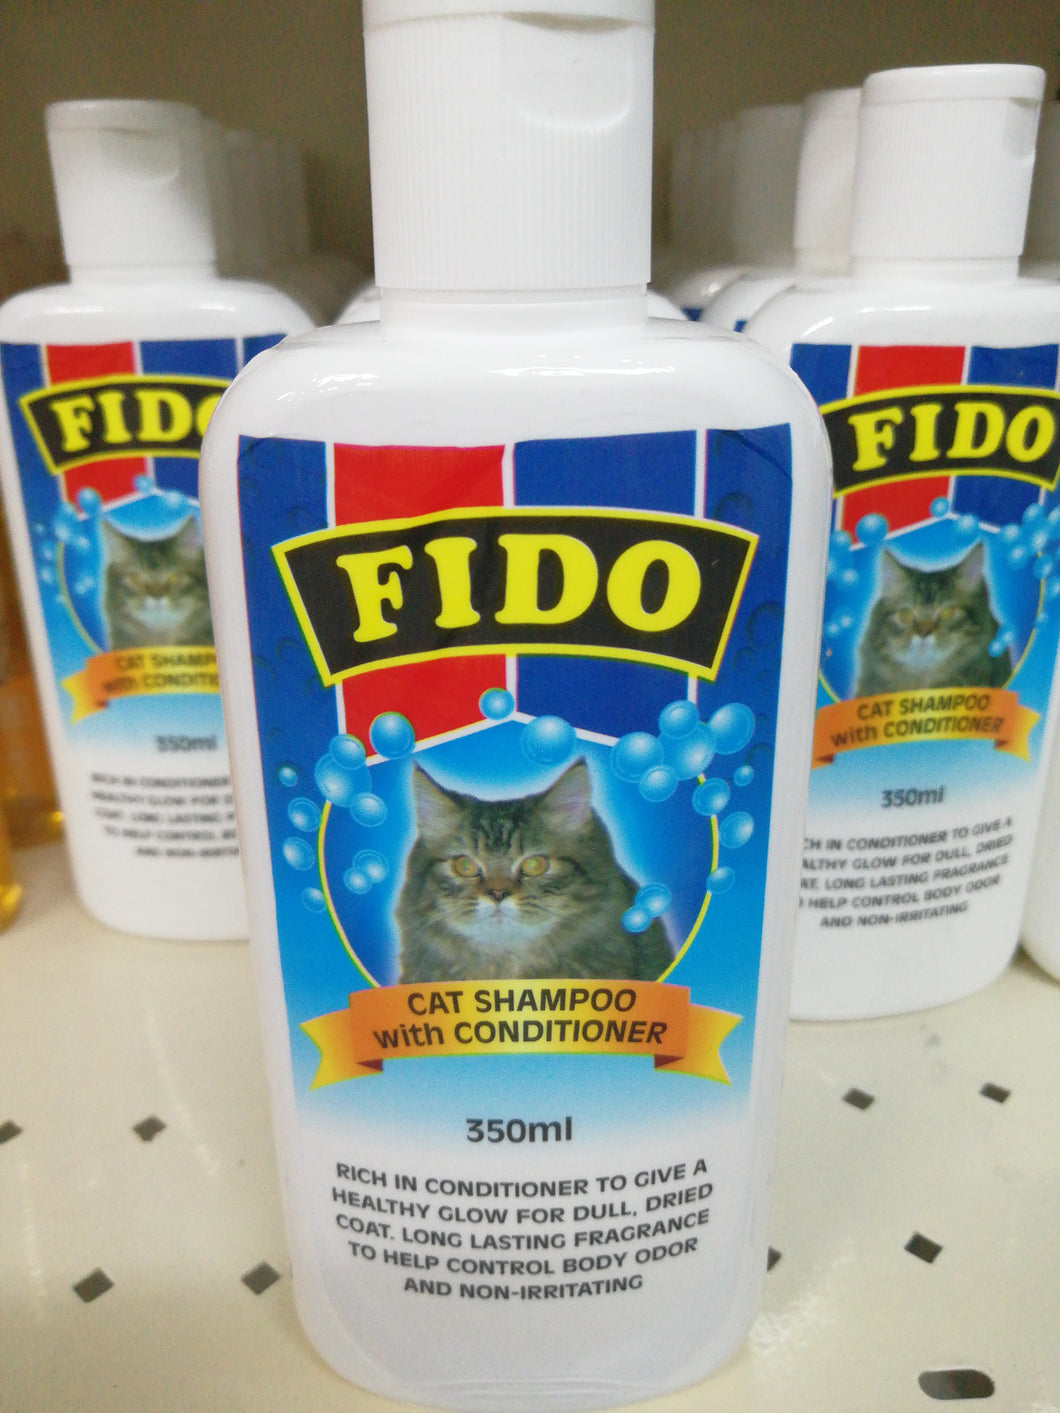 Fido cat shampoo with conditioner. 350ml